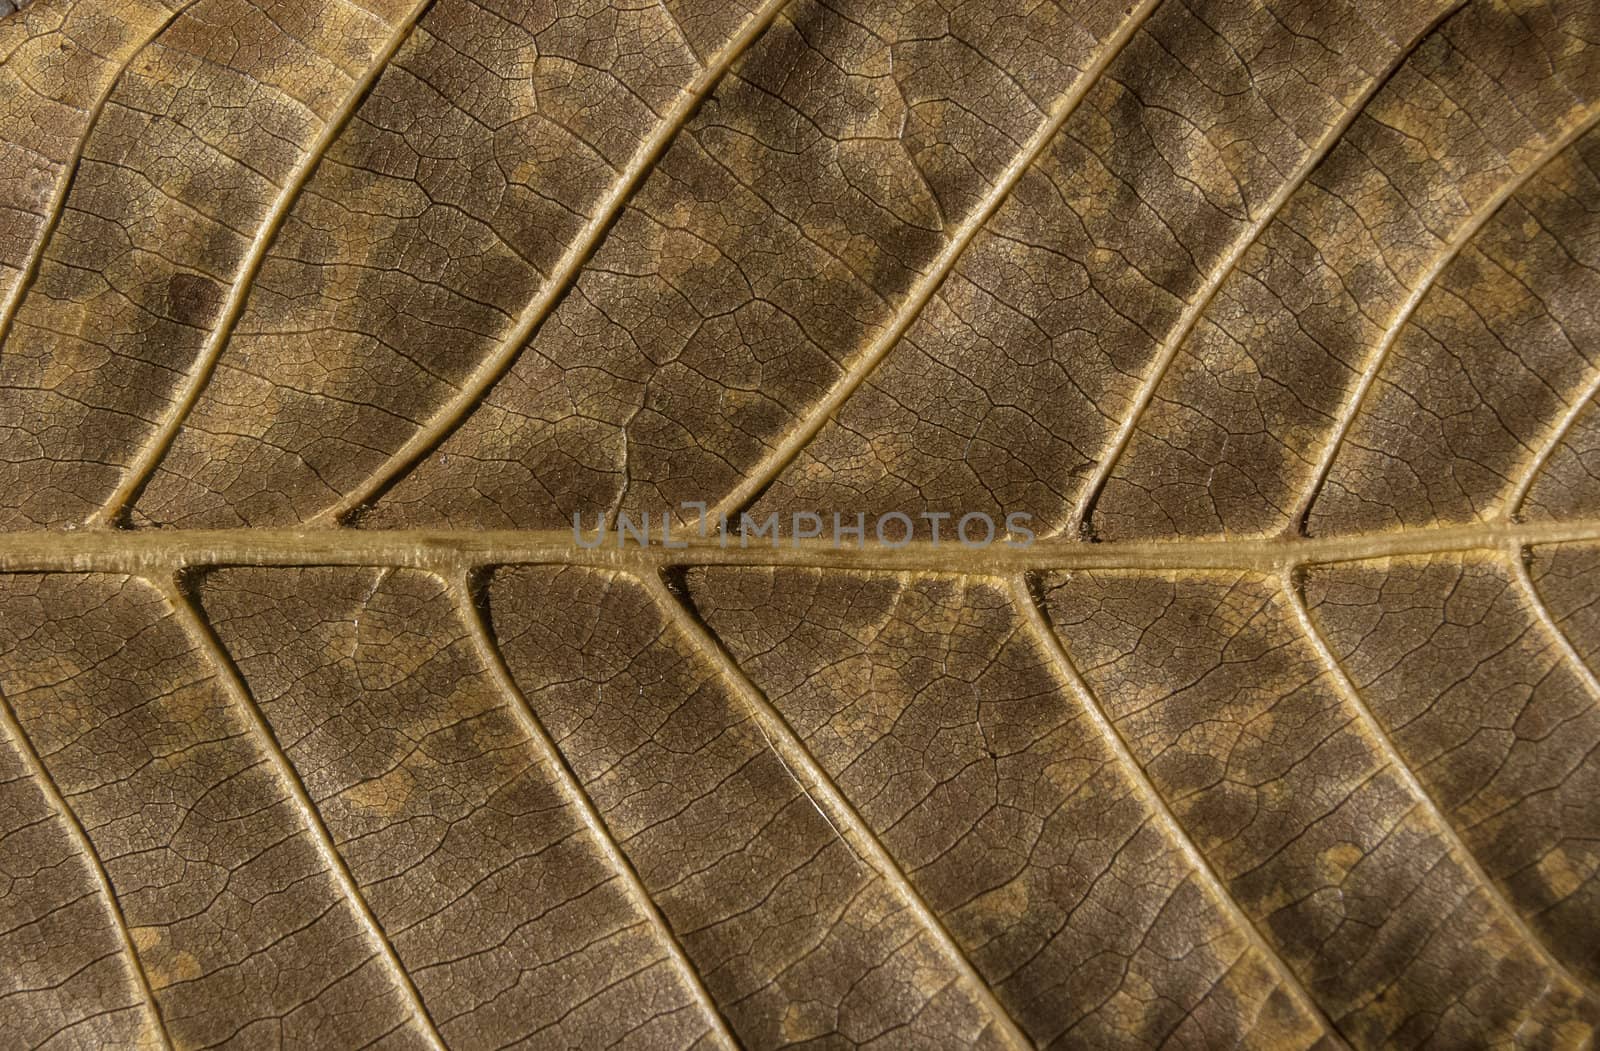 Dry leaf structure underside by varbenov